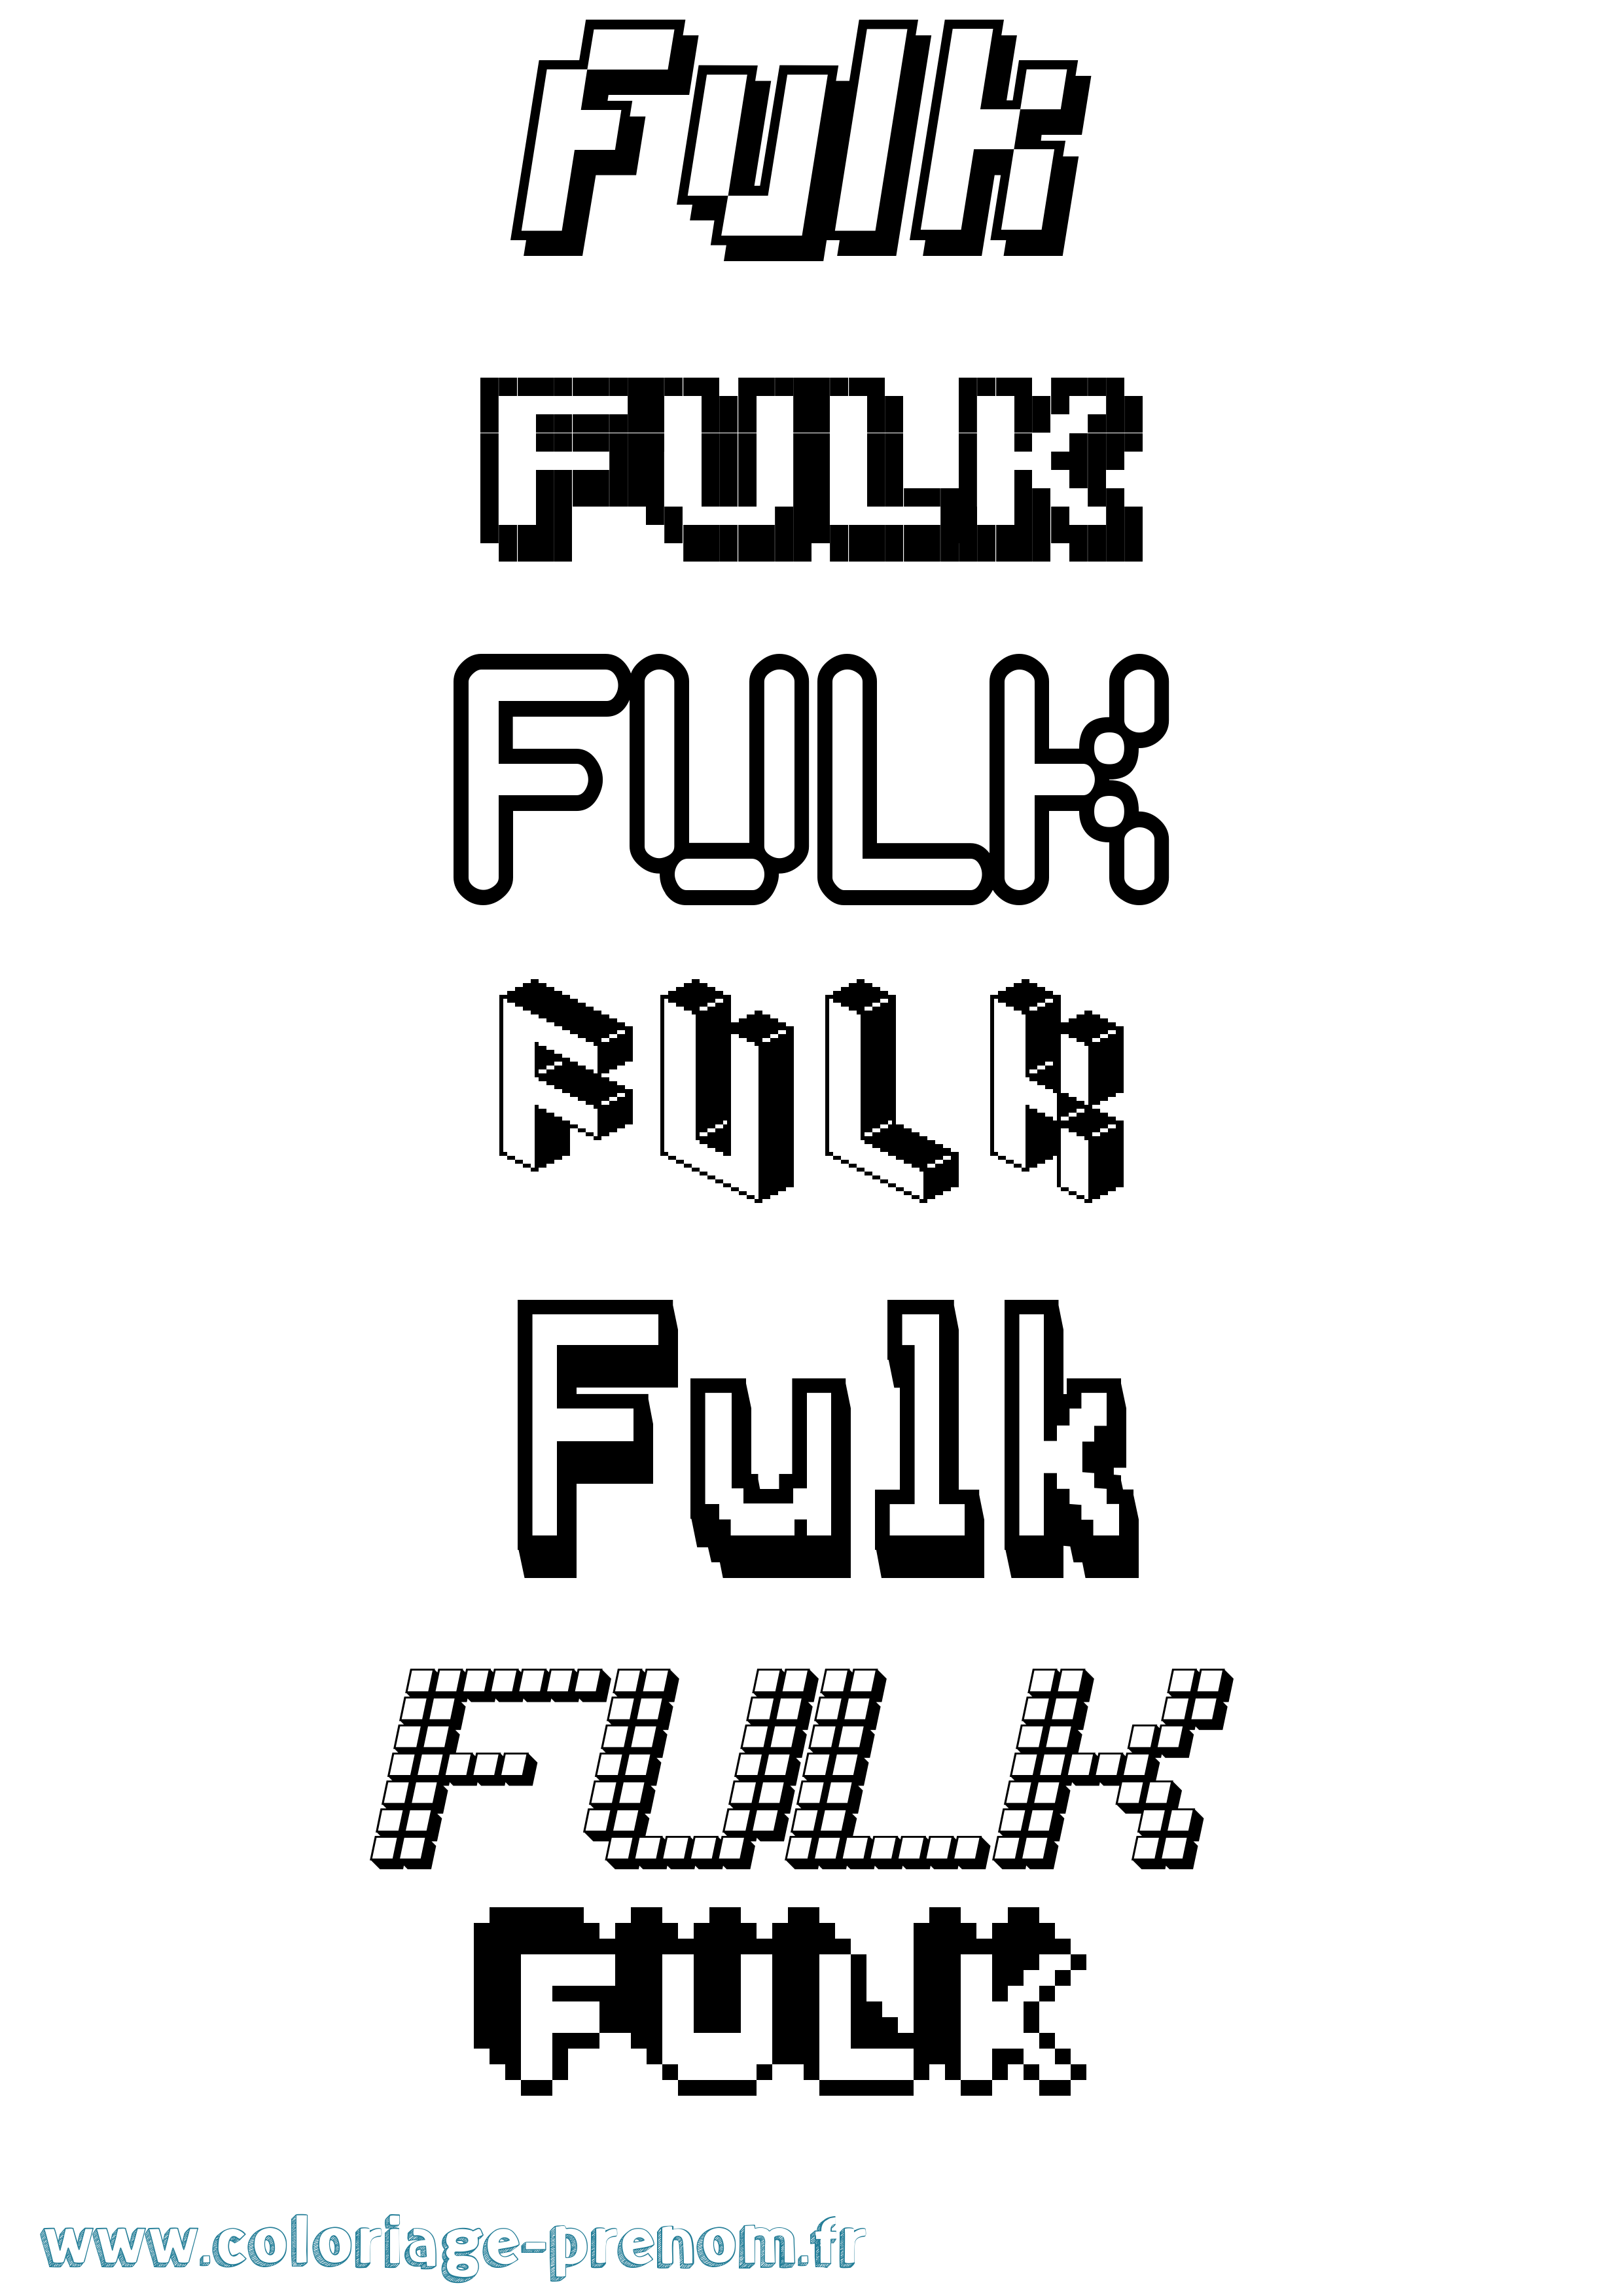 Coloriage prénom Fulk Pixel